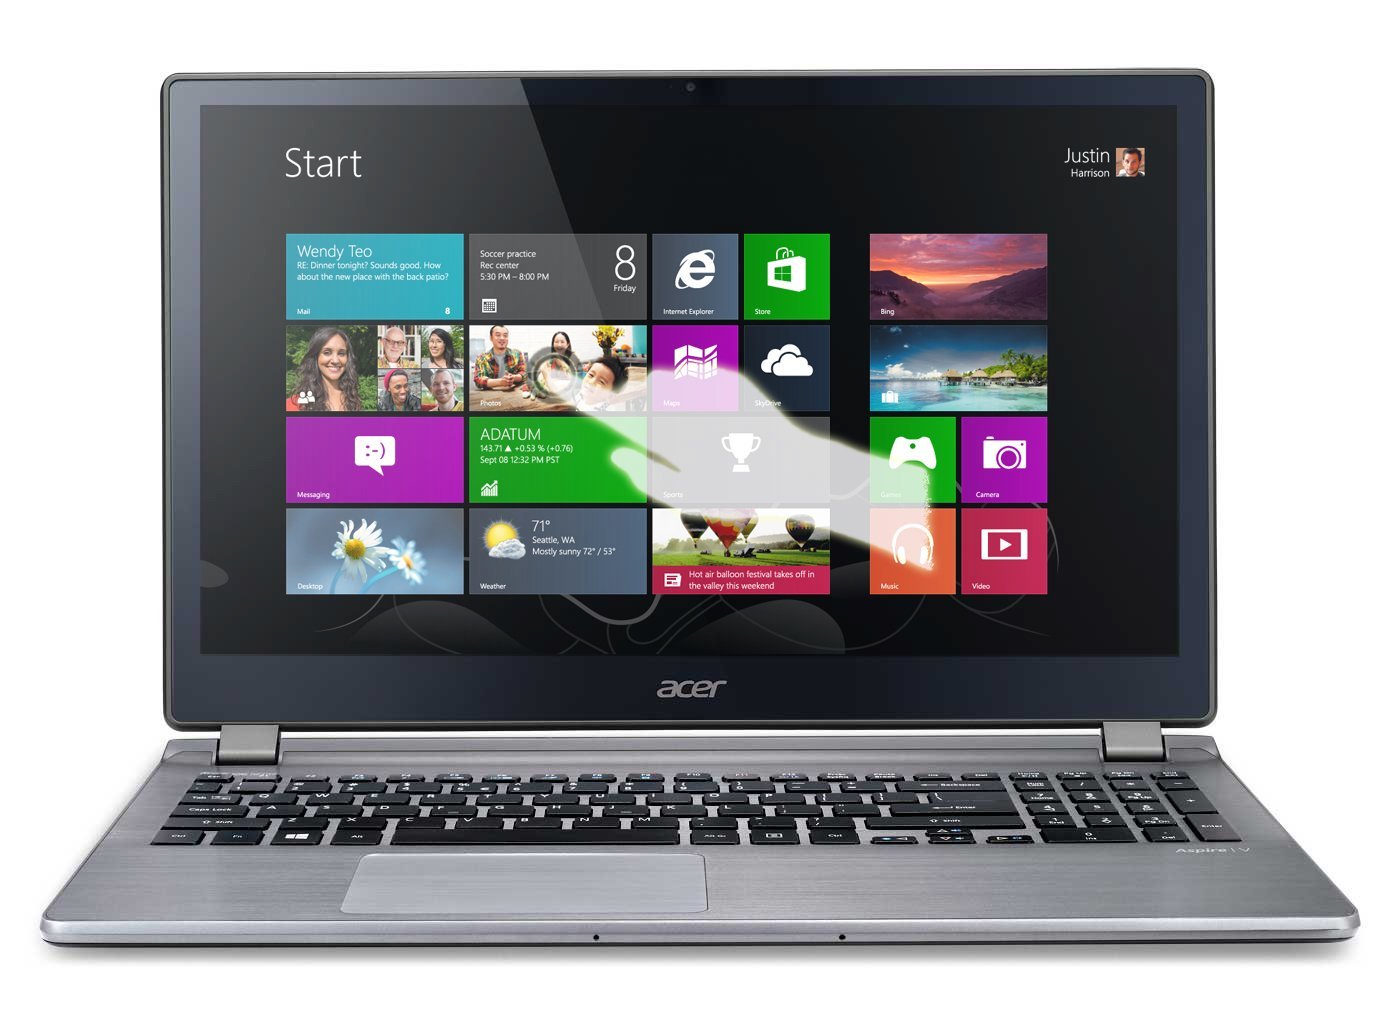 Acer Aspire One Overclocking Software Intelligence